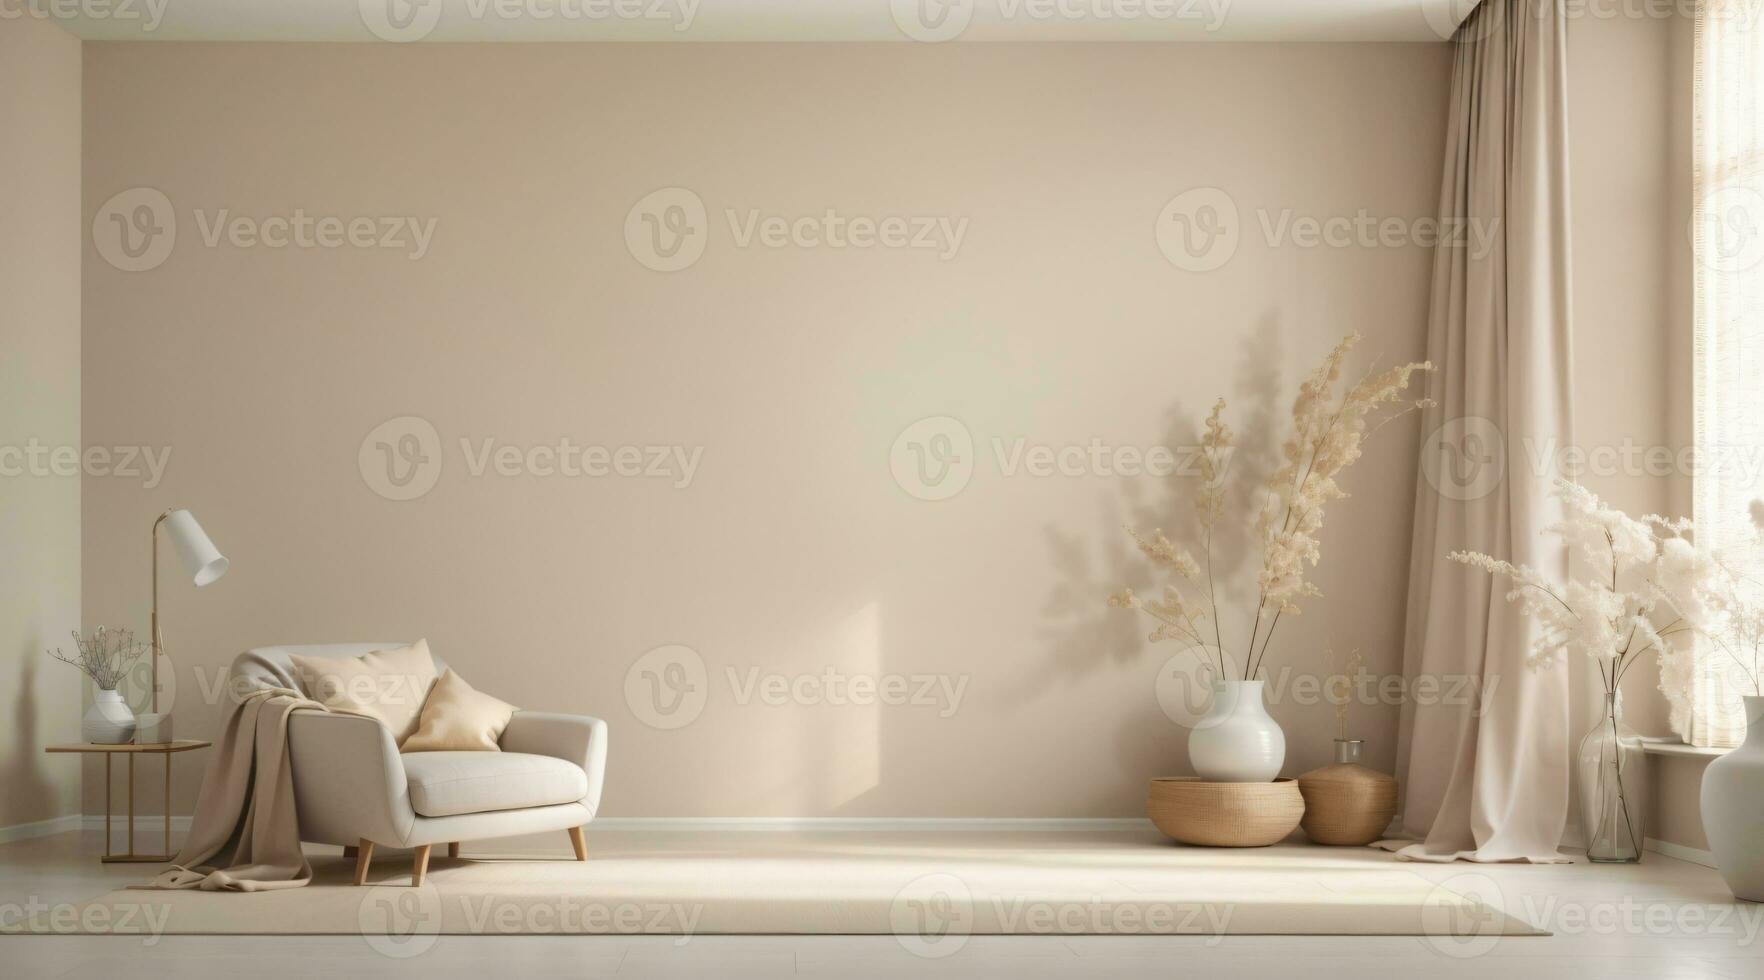 minimalist empty room with warm tone photo